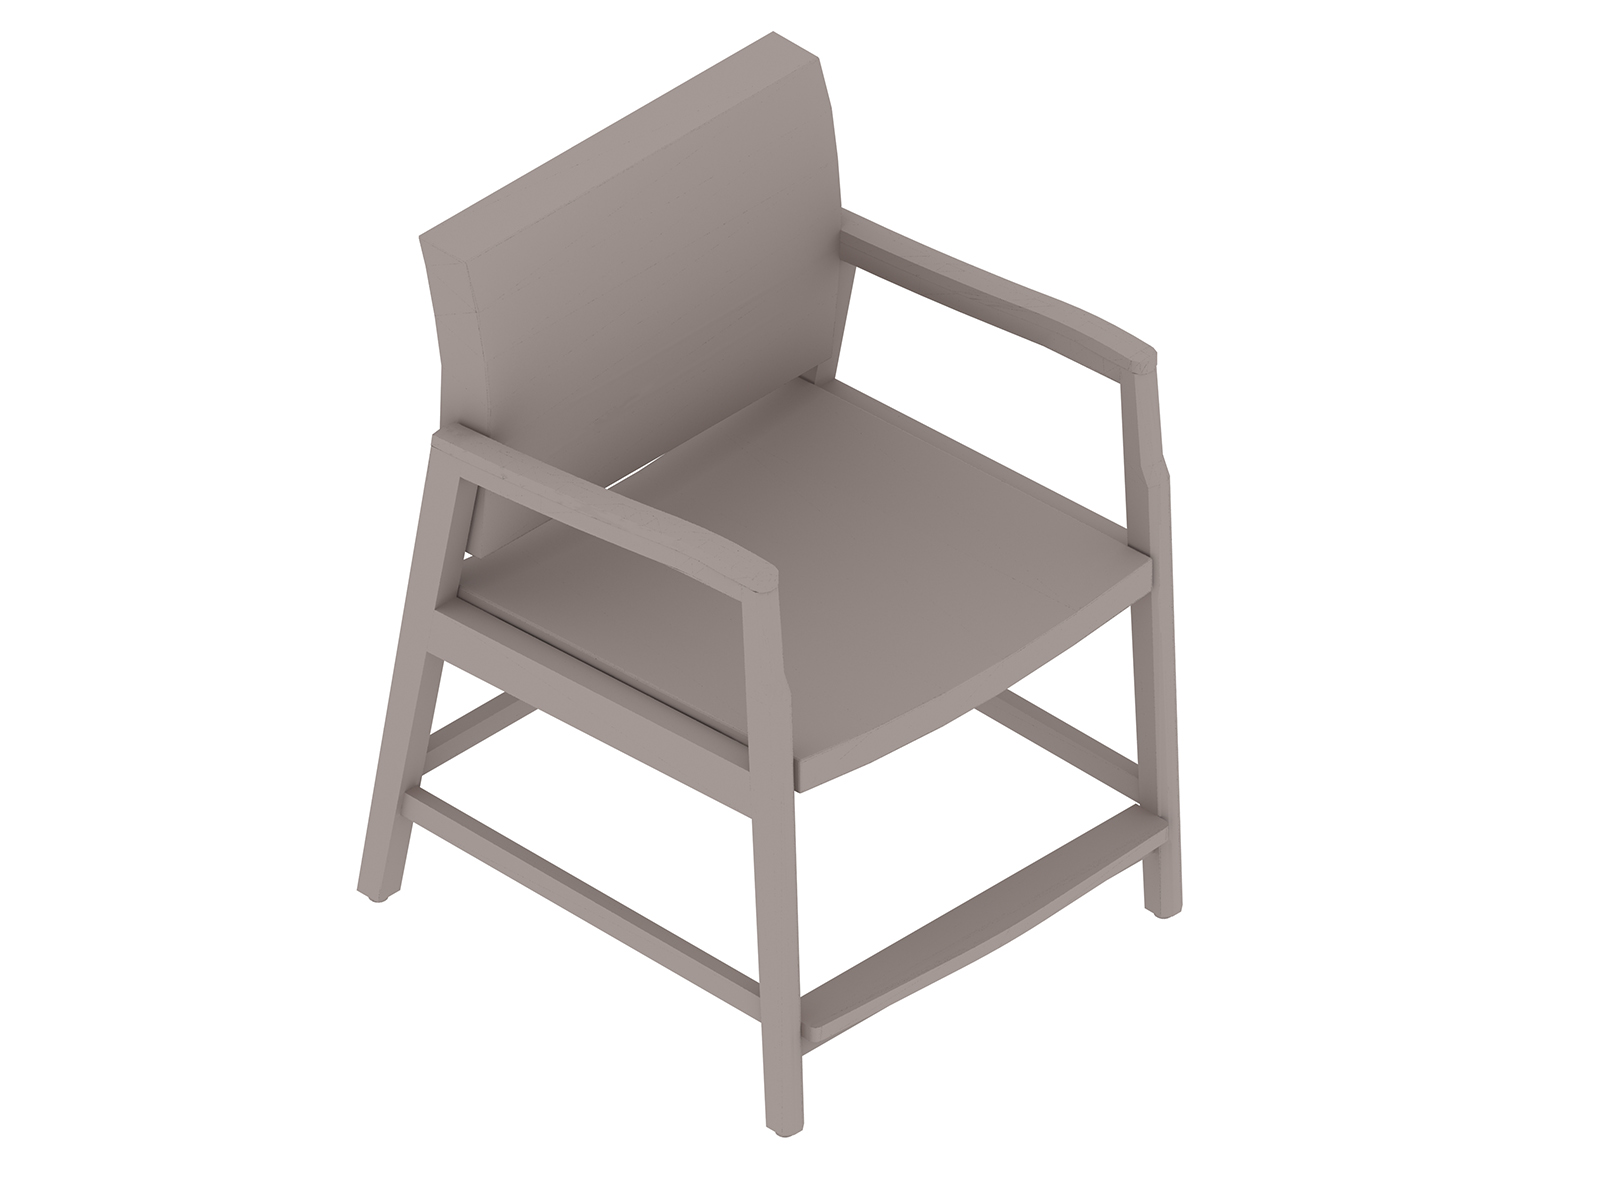 A generic rendering - Nemschoff Monarch Easy Access Chair